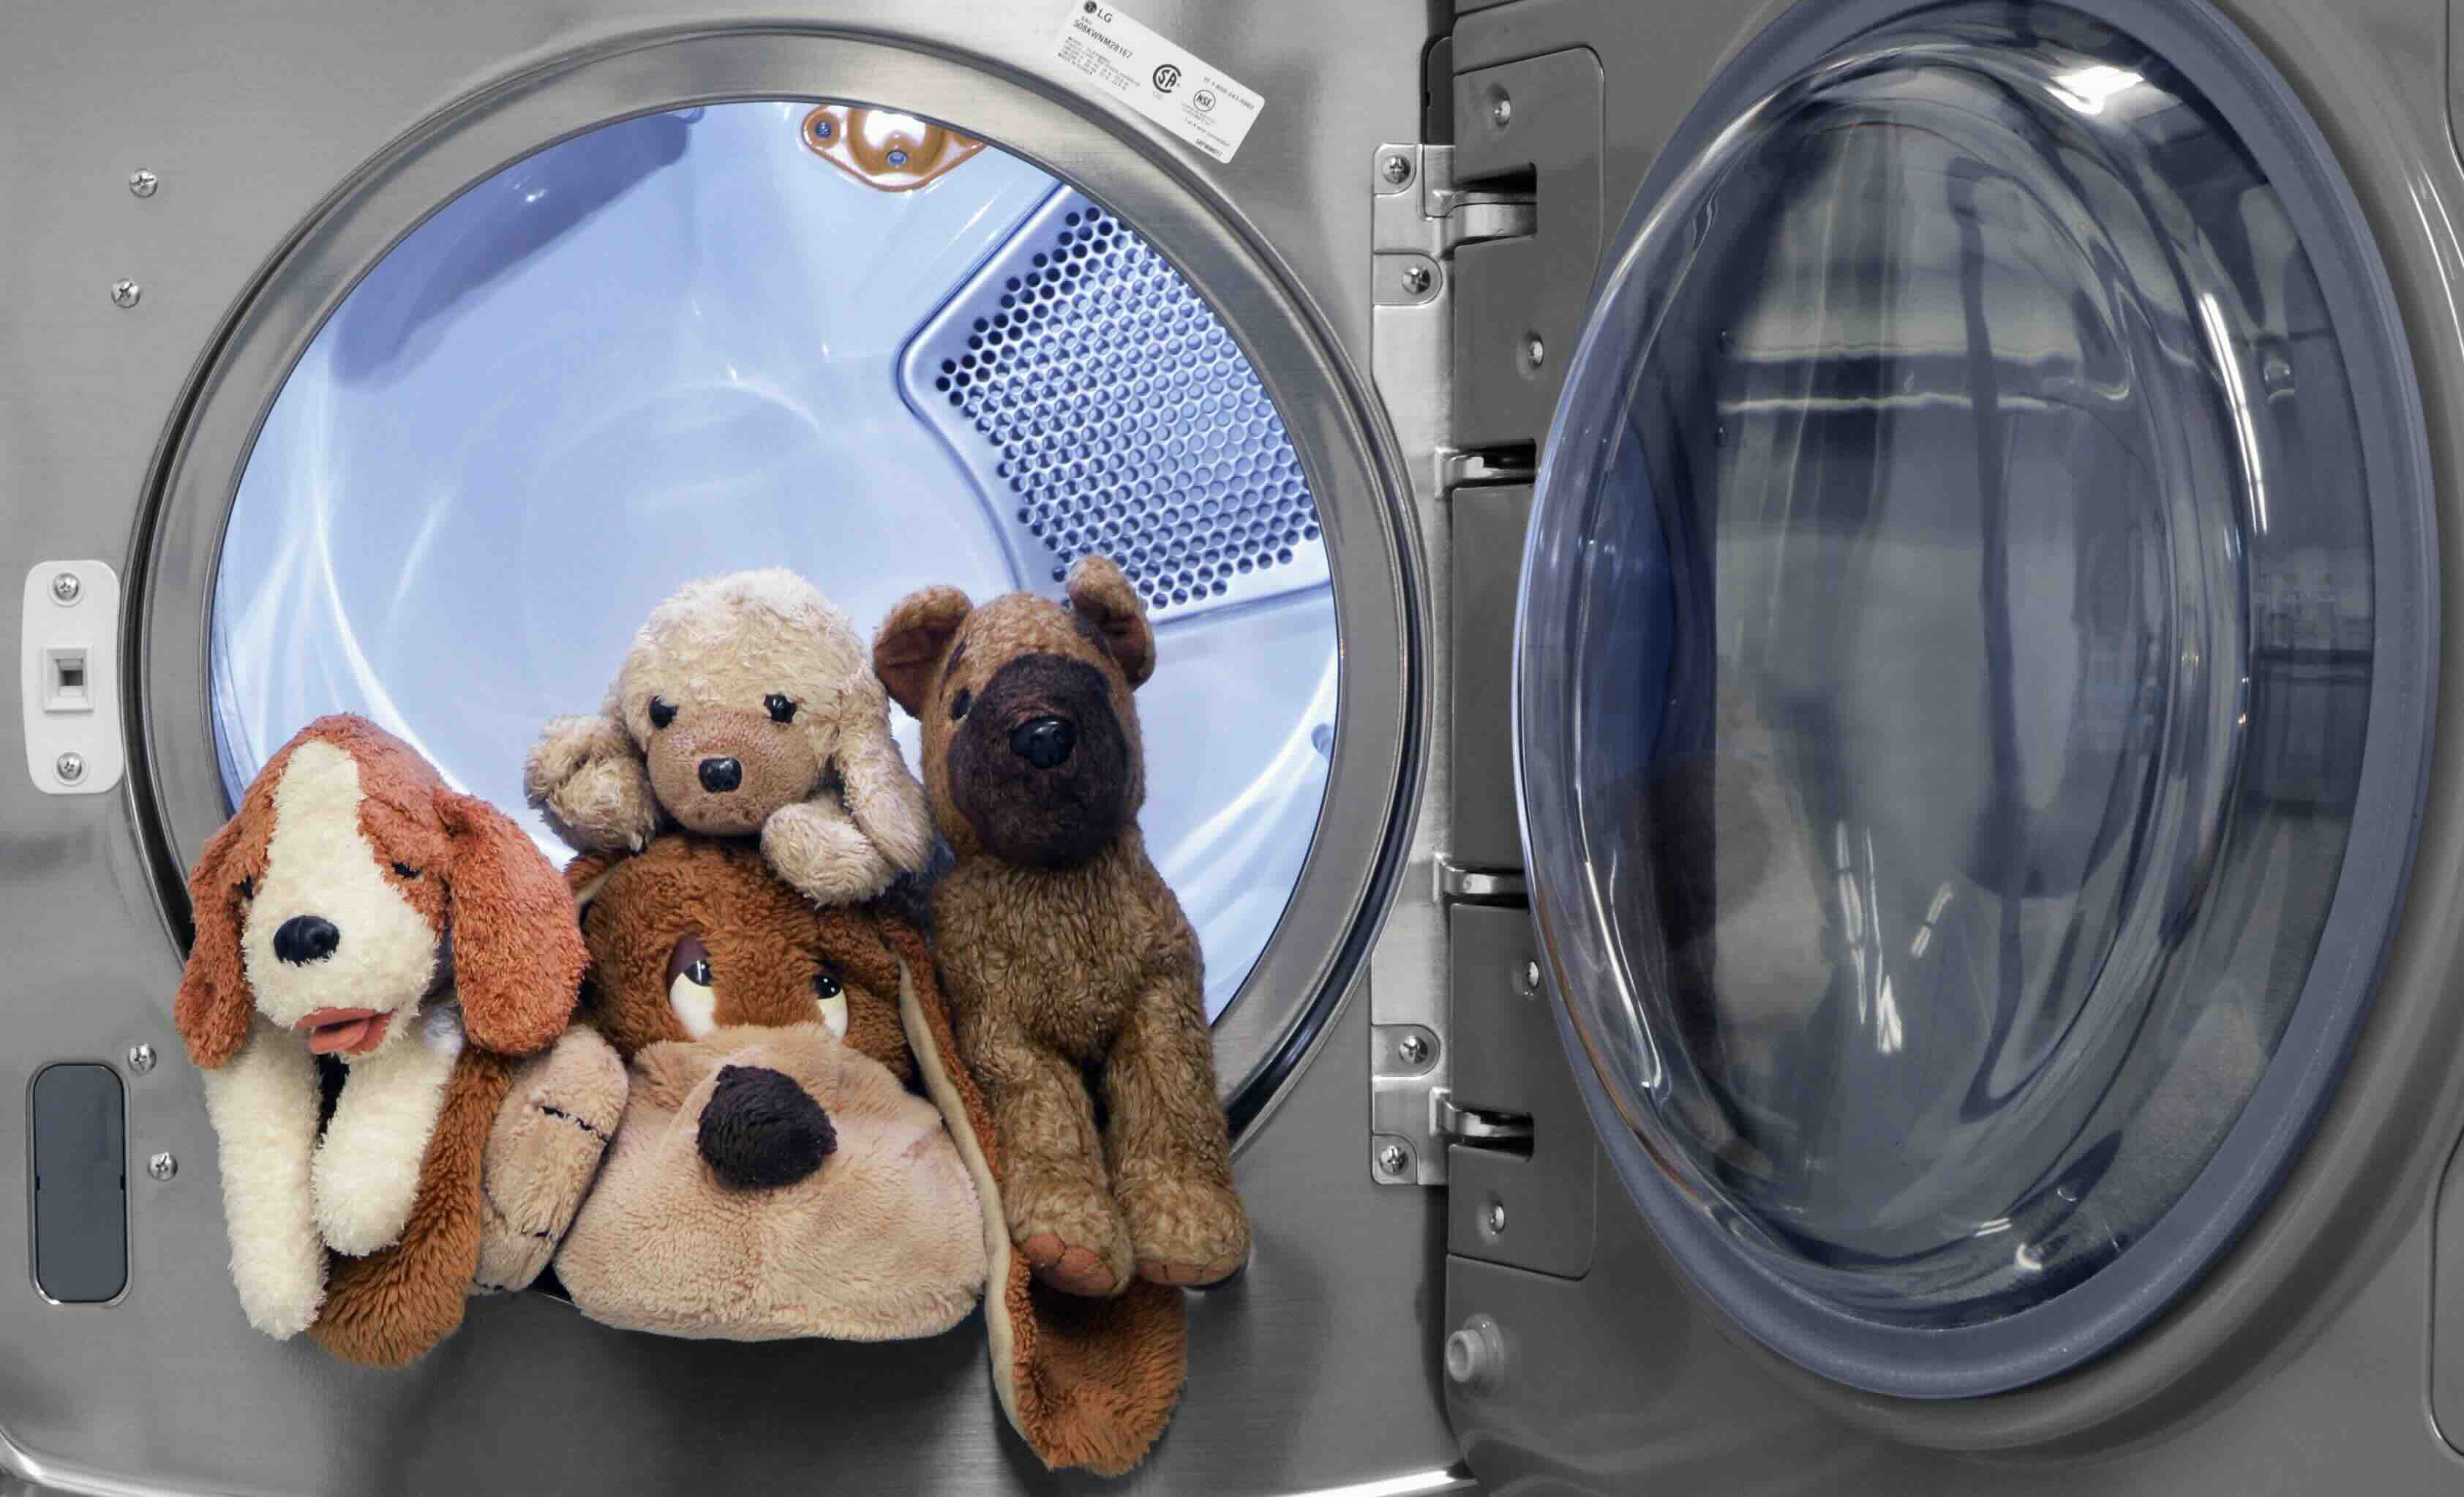 How To Wash Stuffed Animals In The Washing Machine